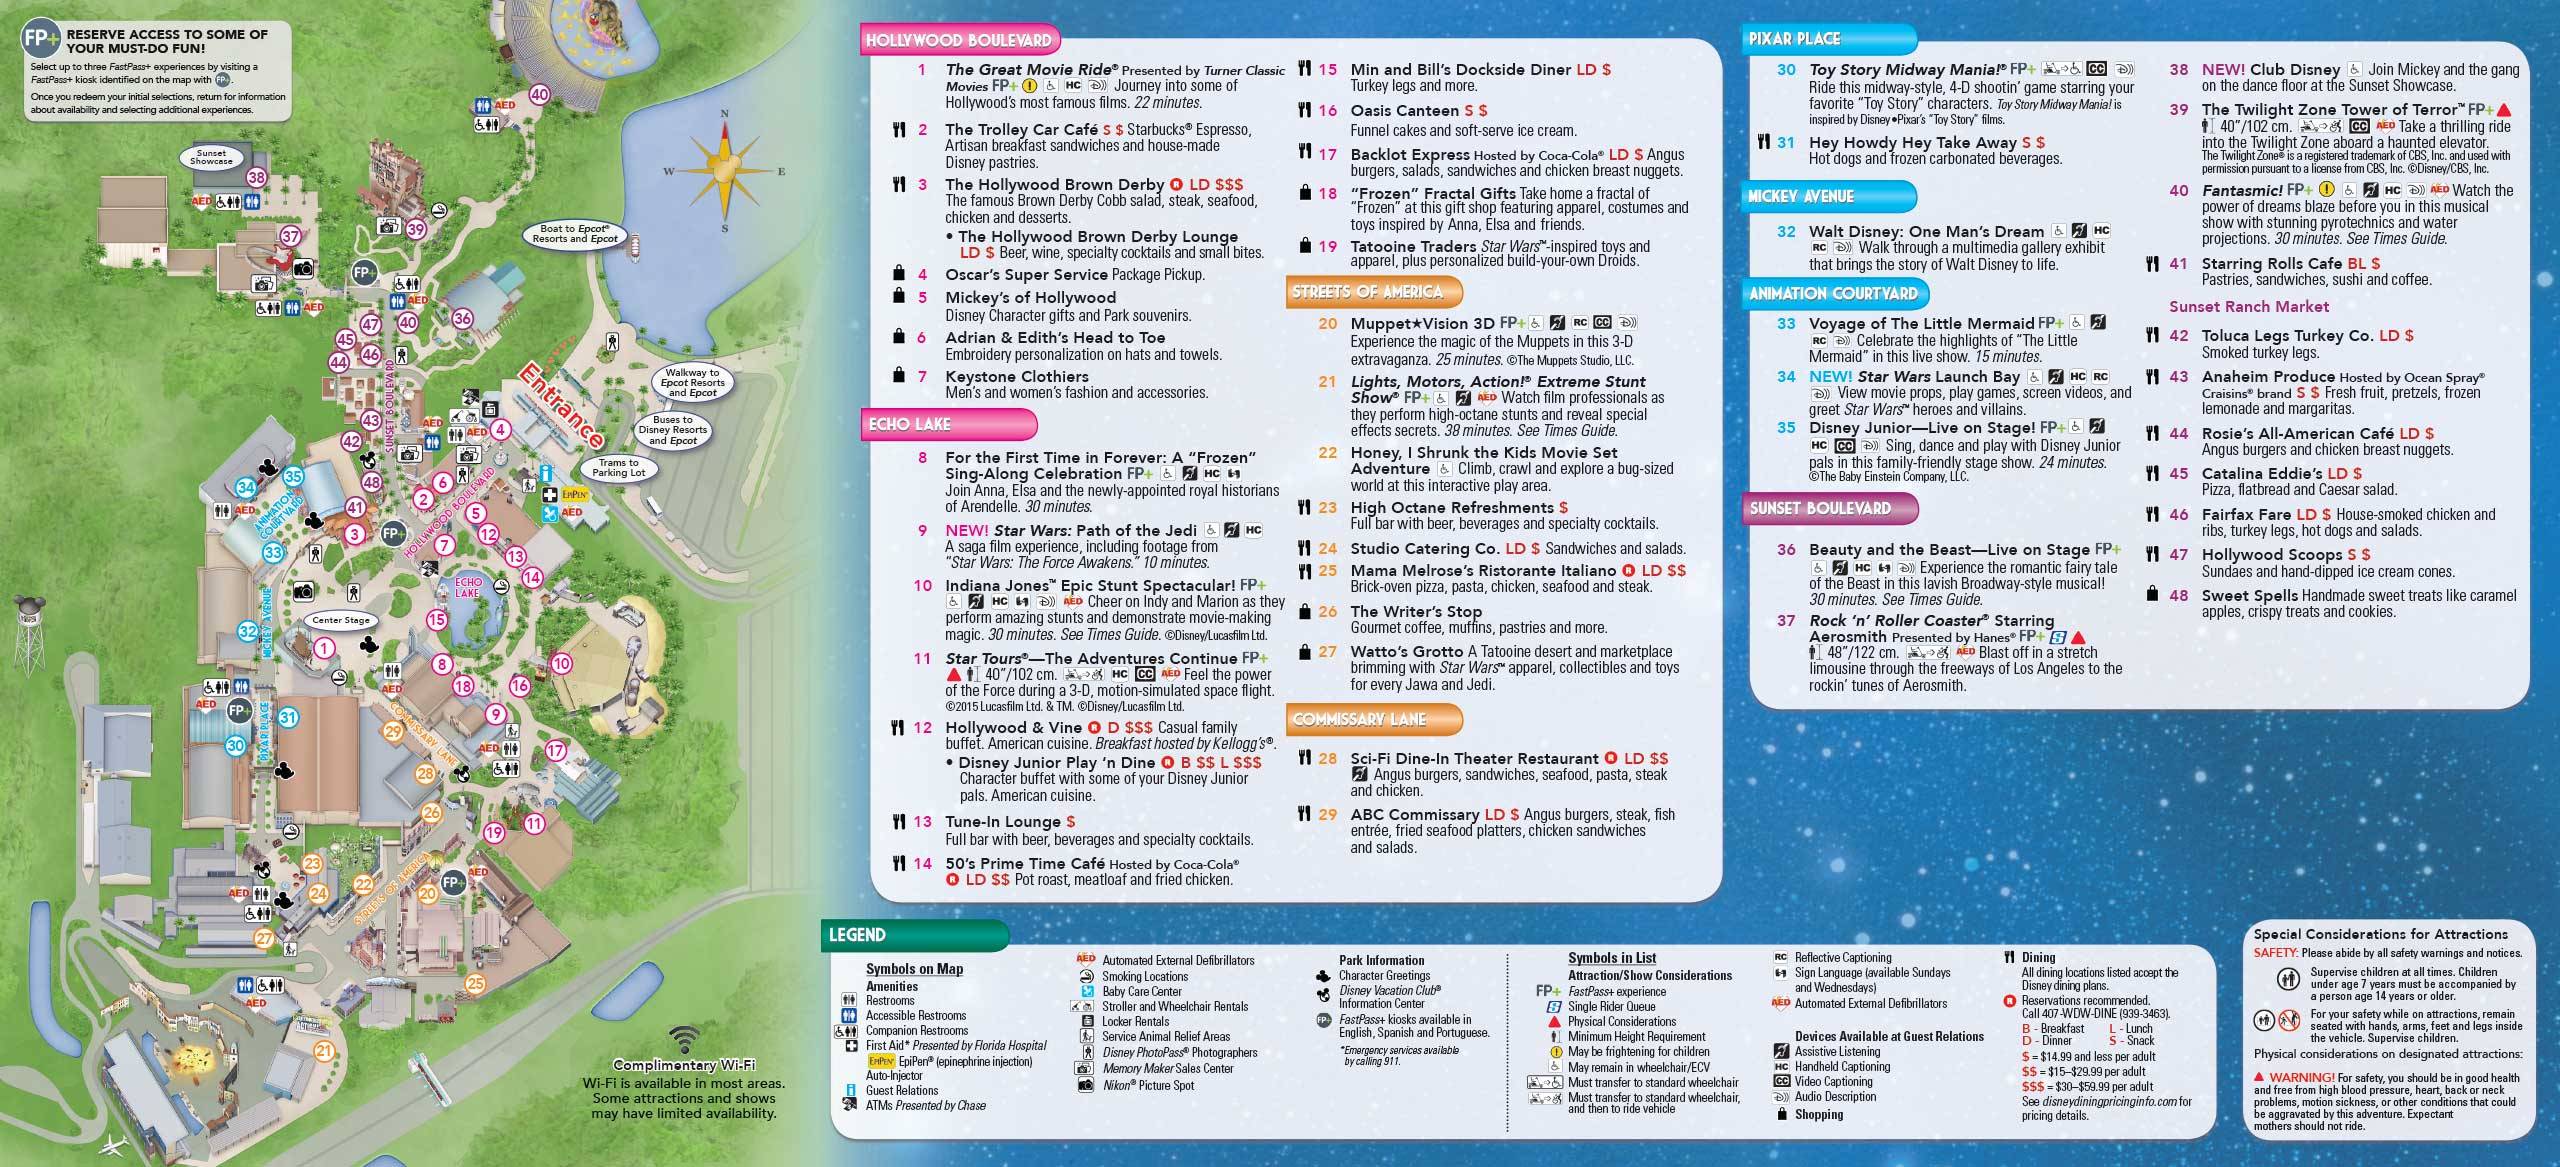 Disney's Hollywood Studios Guide Map January 2016 - Back